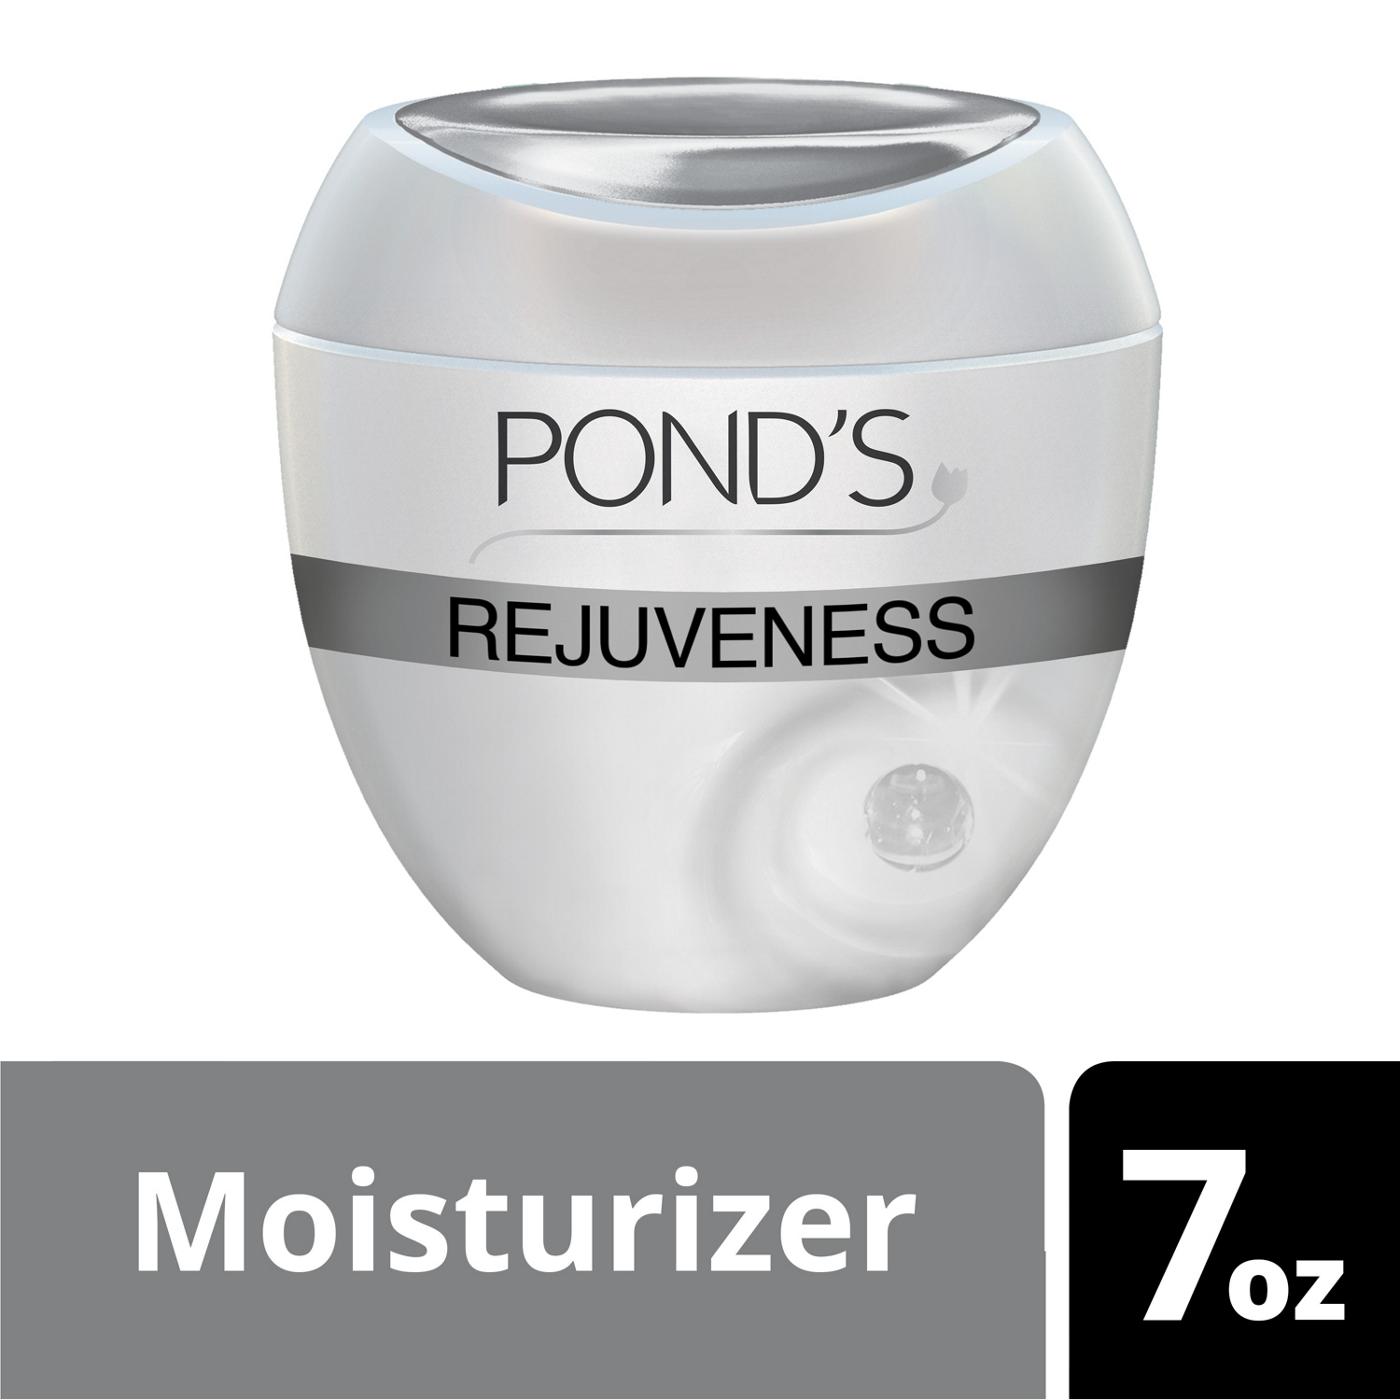 Pond's Rejuveness Anti-Wrinkle Cream; image 3 of 4